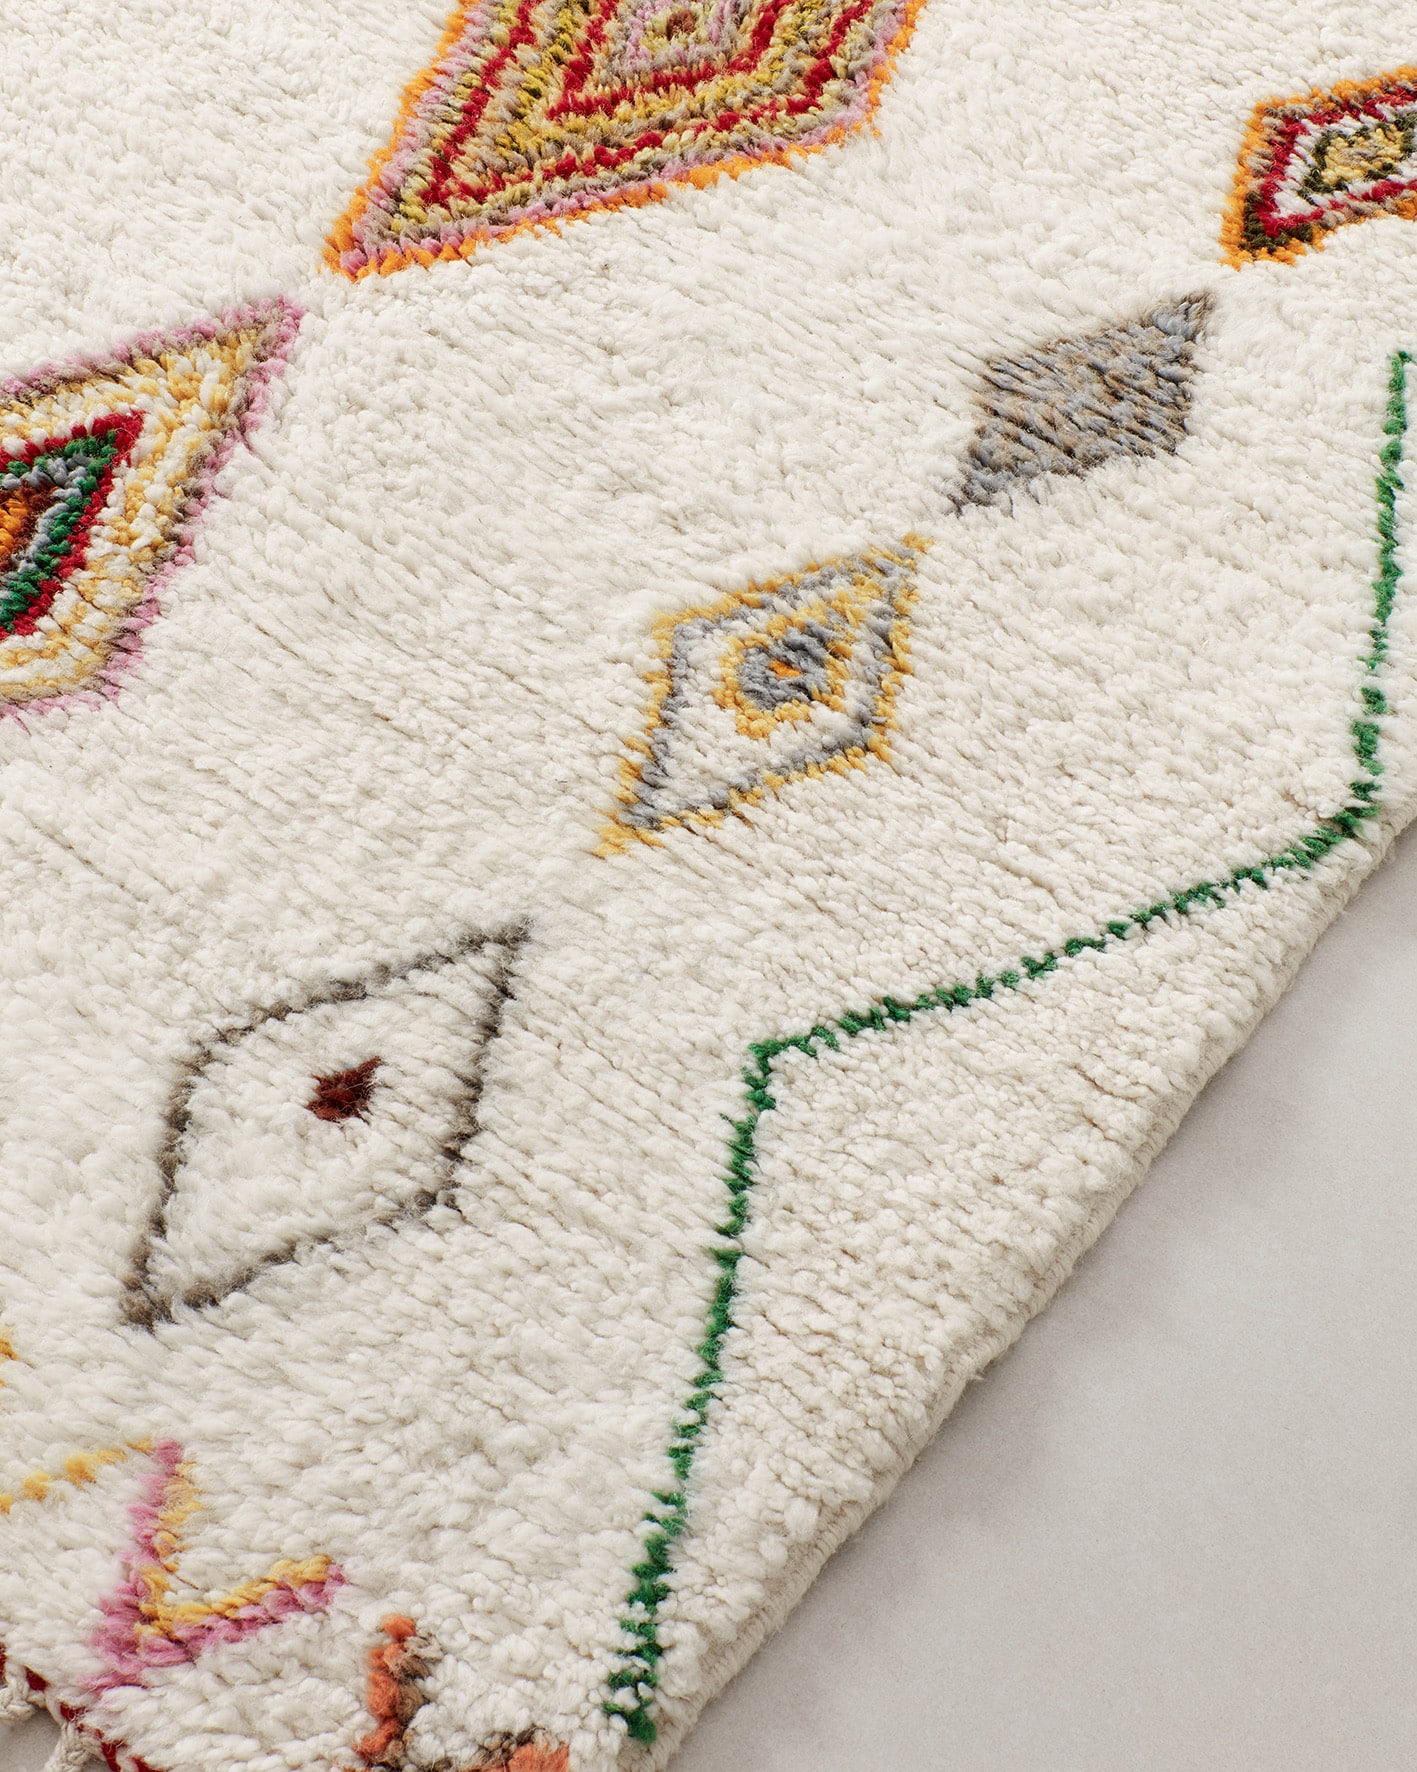 Berber rug with rainbow lozenges, close